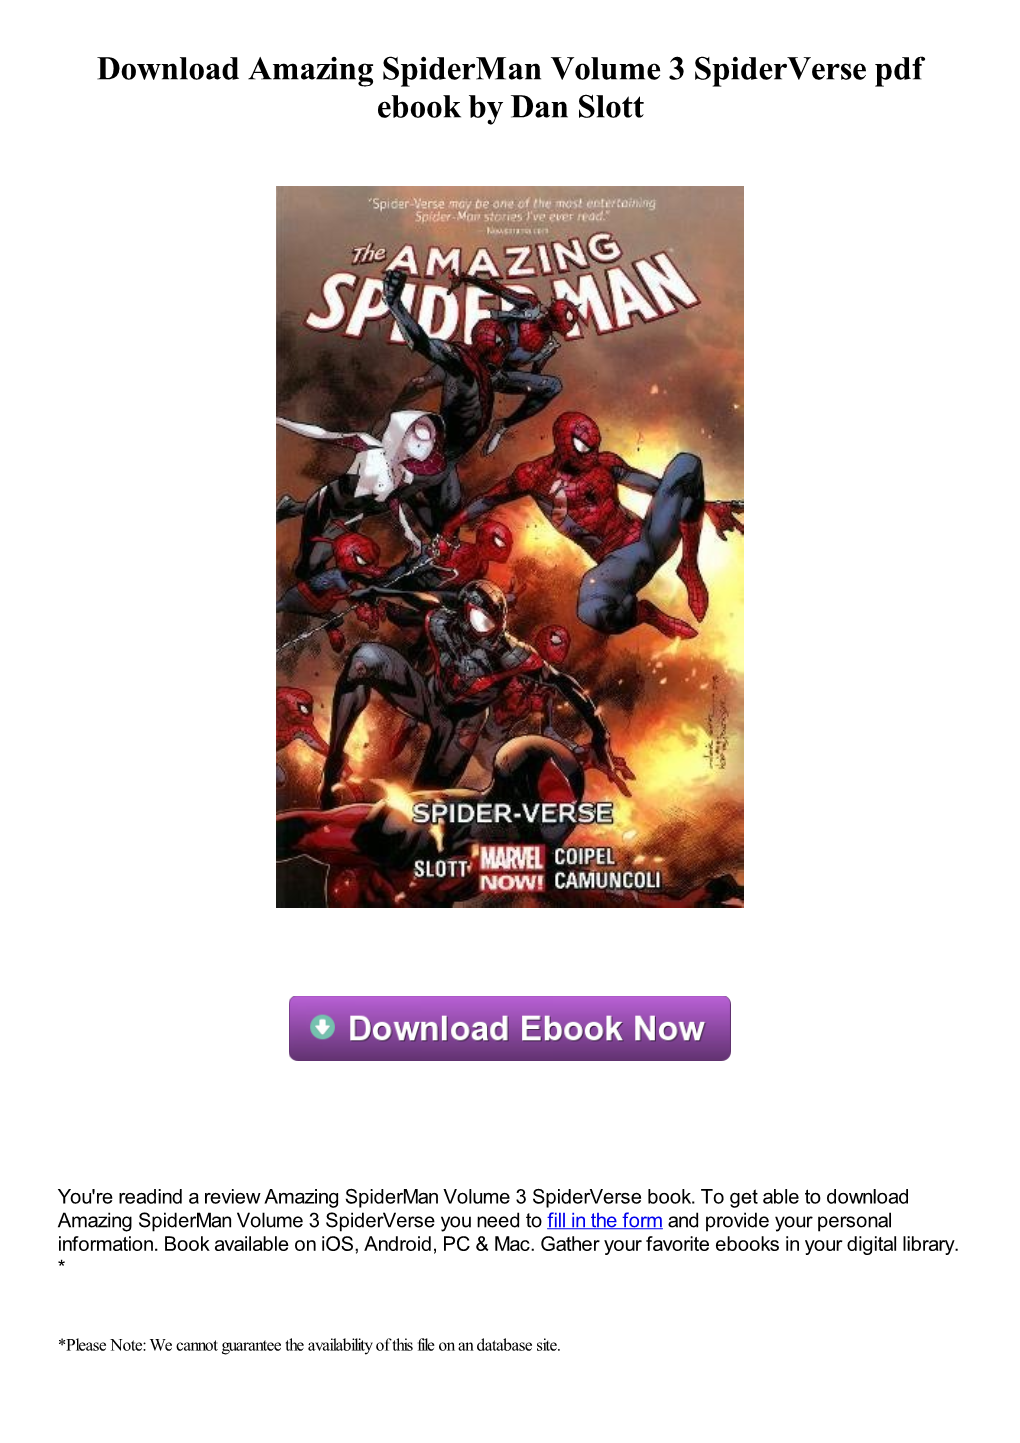 Download Amazing Spiderman Volume 3 Spiderverse Pdf Ebook by Dan Slott